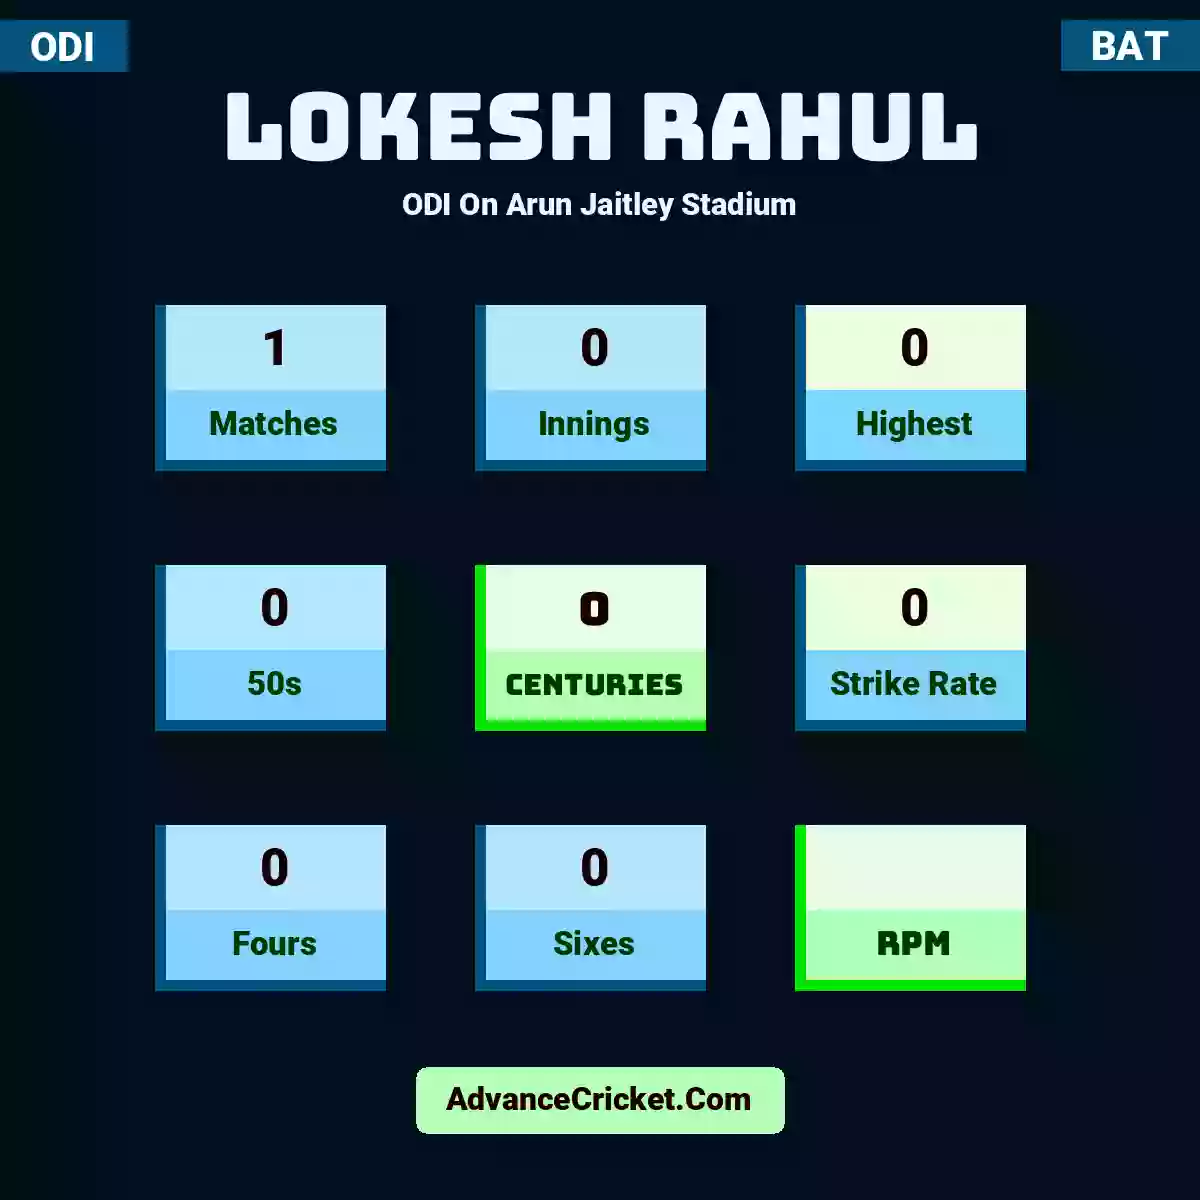 Lokesh Rahul ODI  On Arun Jaitley Stadium, Lokesh Rahul played 1 matches, scored 0 runs as highest, 0 half-centuries, and 0 centuries, with a strike rate of 0. KL.Rahul hit 0 fours and 0 sixes.